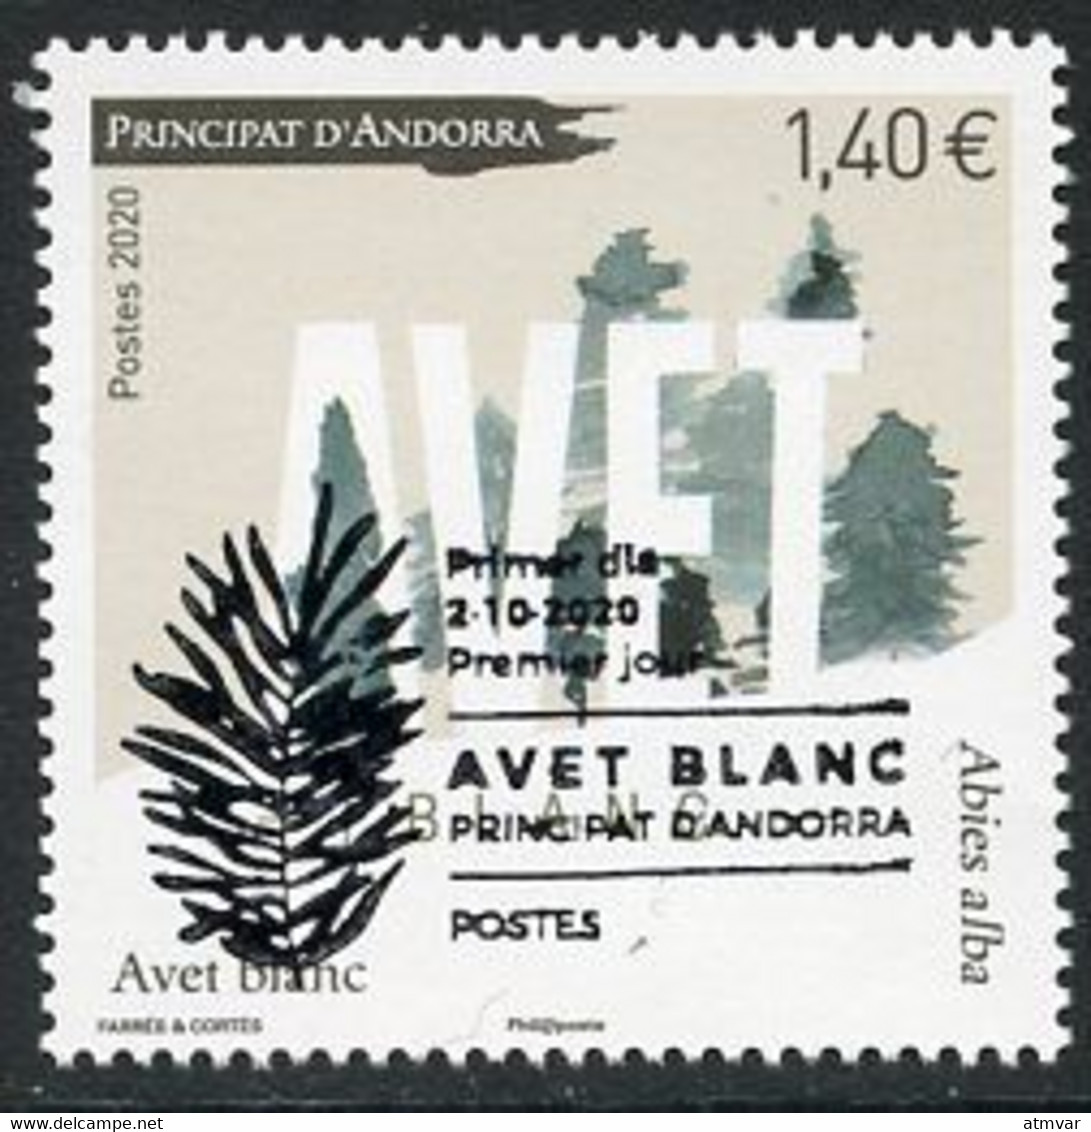 ANDORRA ANDORRE (2020) - Avet Blanc, Abies Alba, Sapin Blanc - Premier Jour, First Day Postmark, Matasello Primer Día - Usati